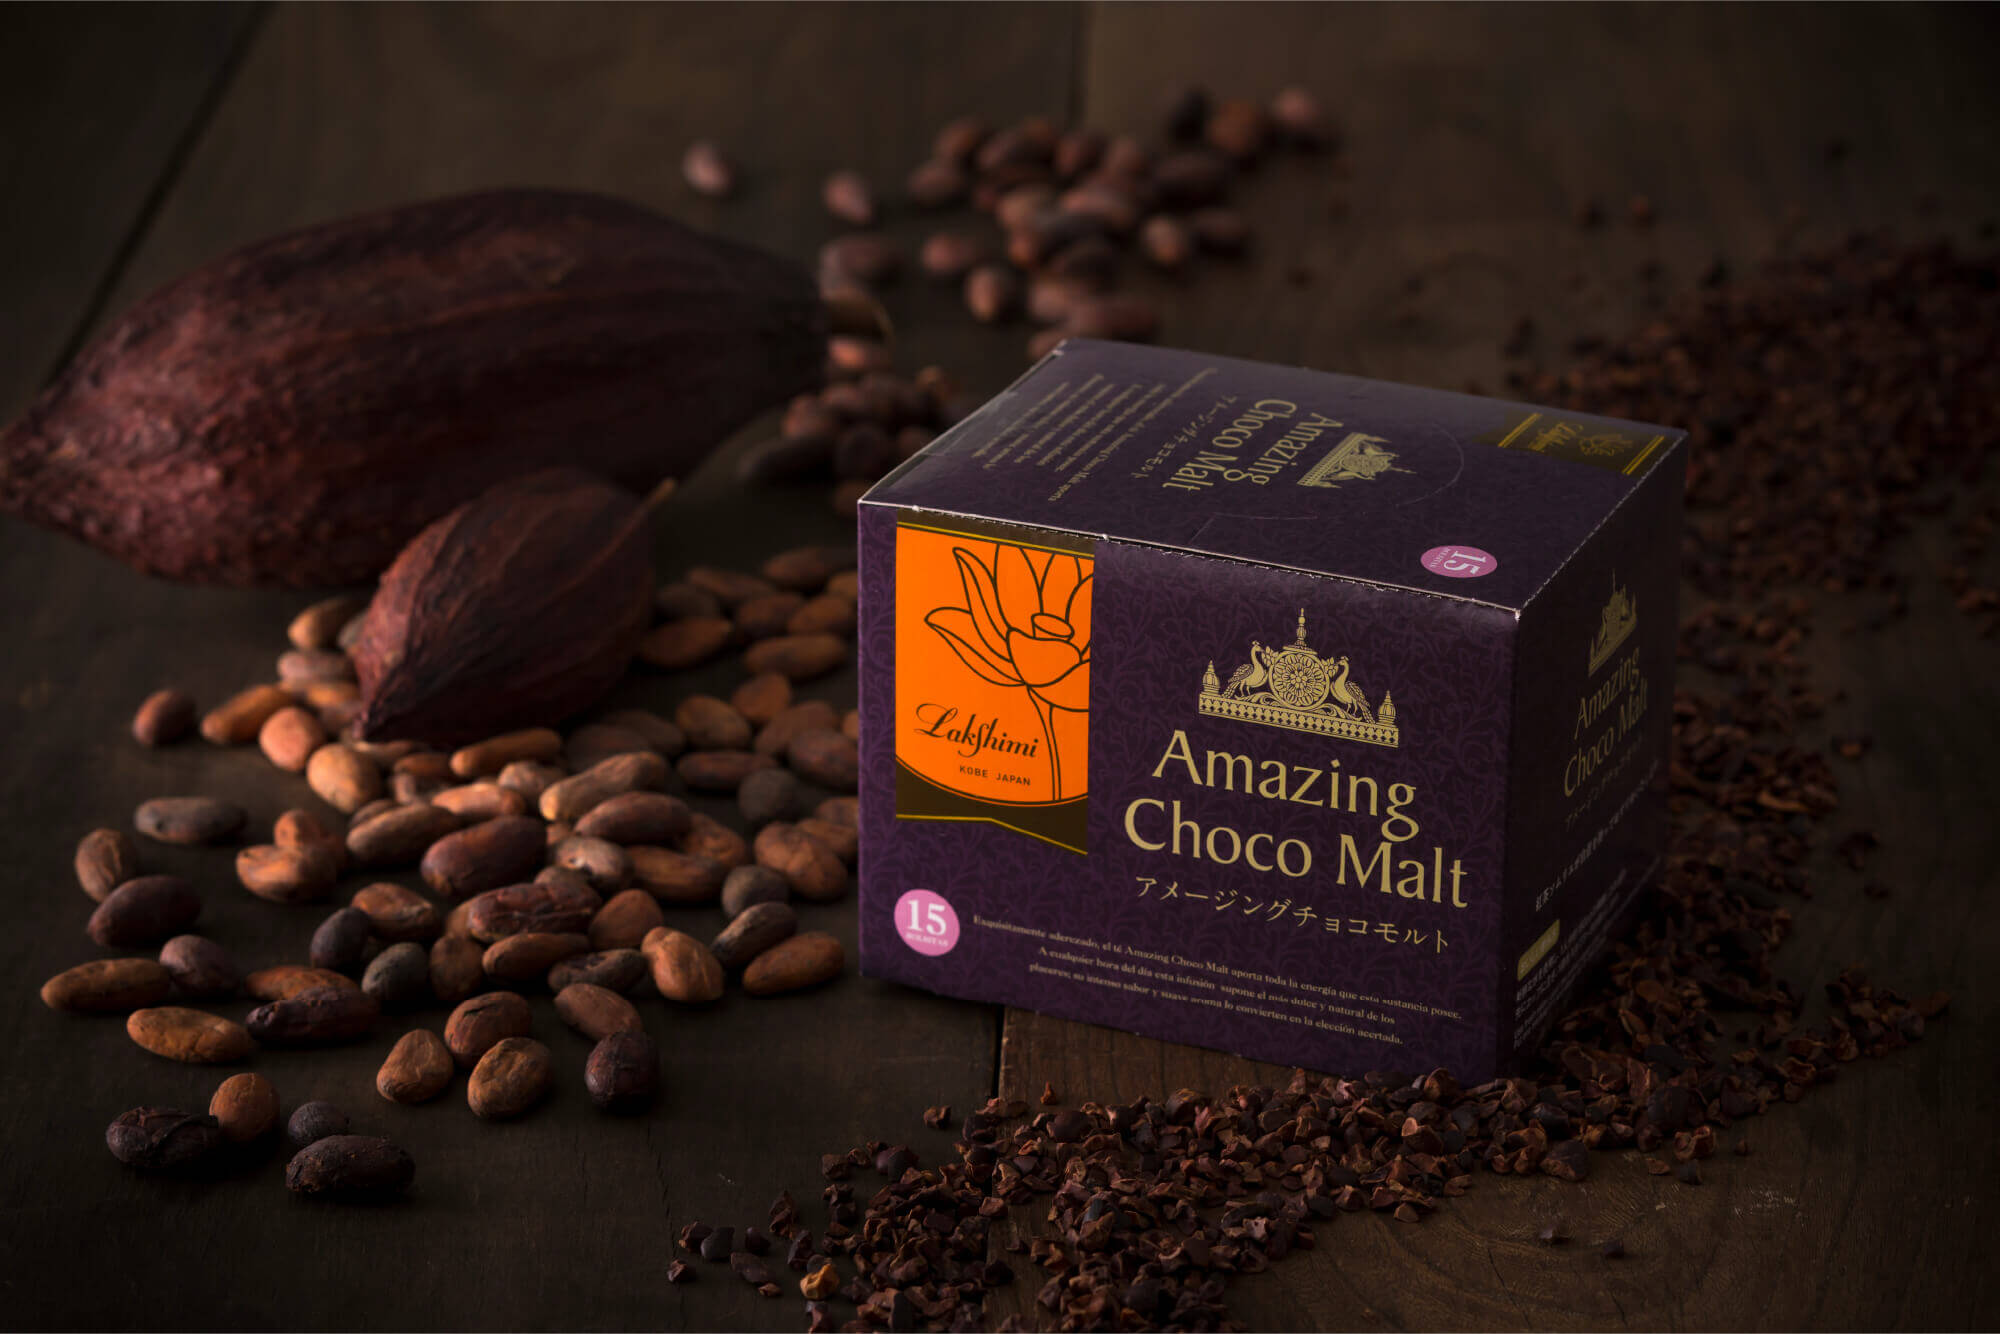 Amazing Choco Malt